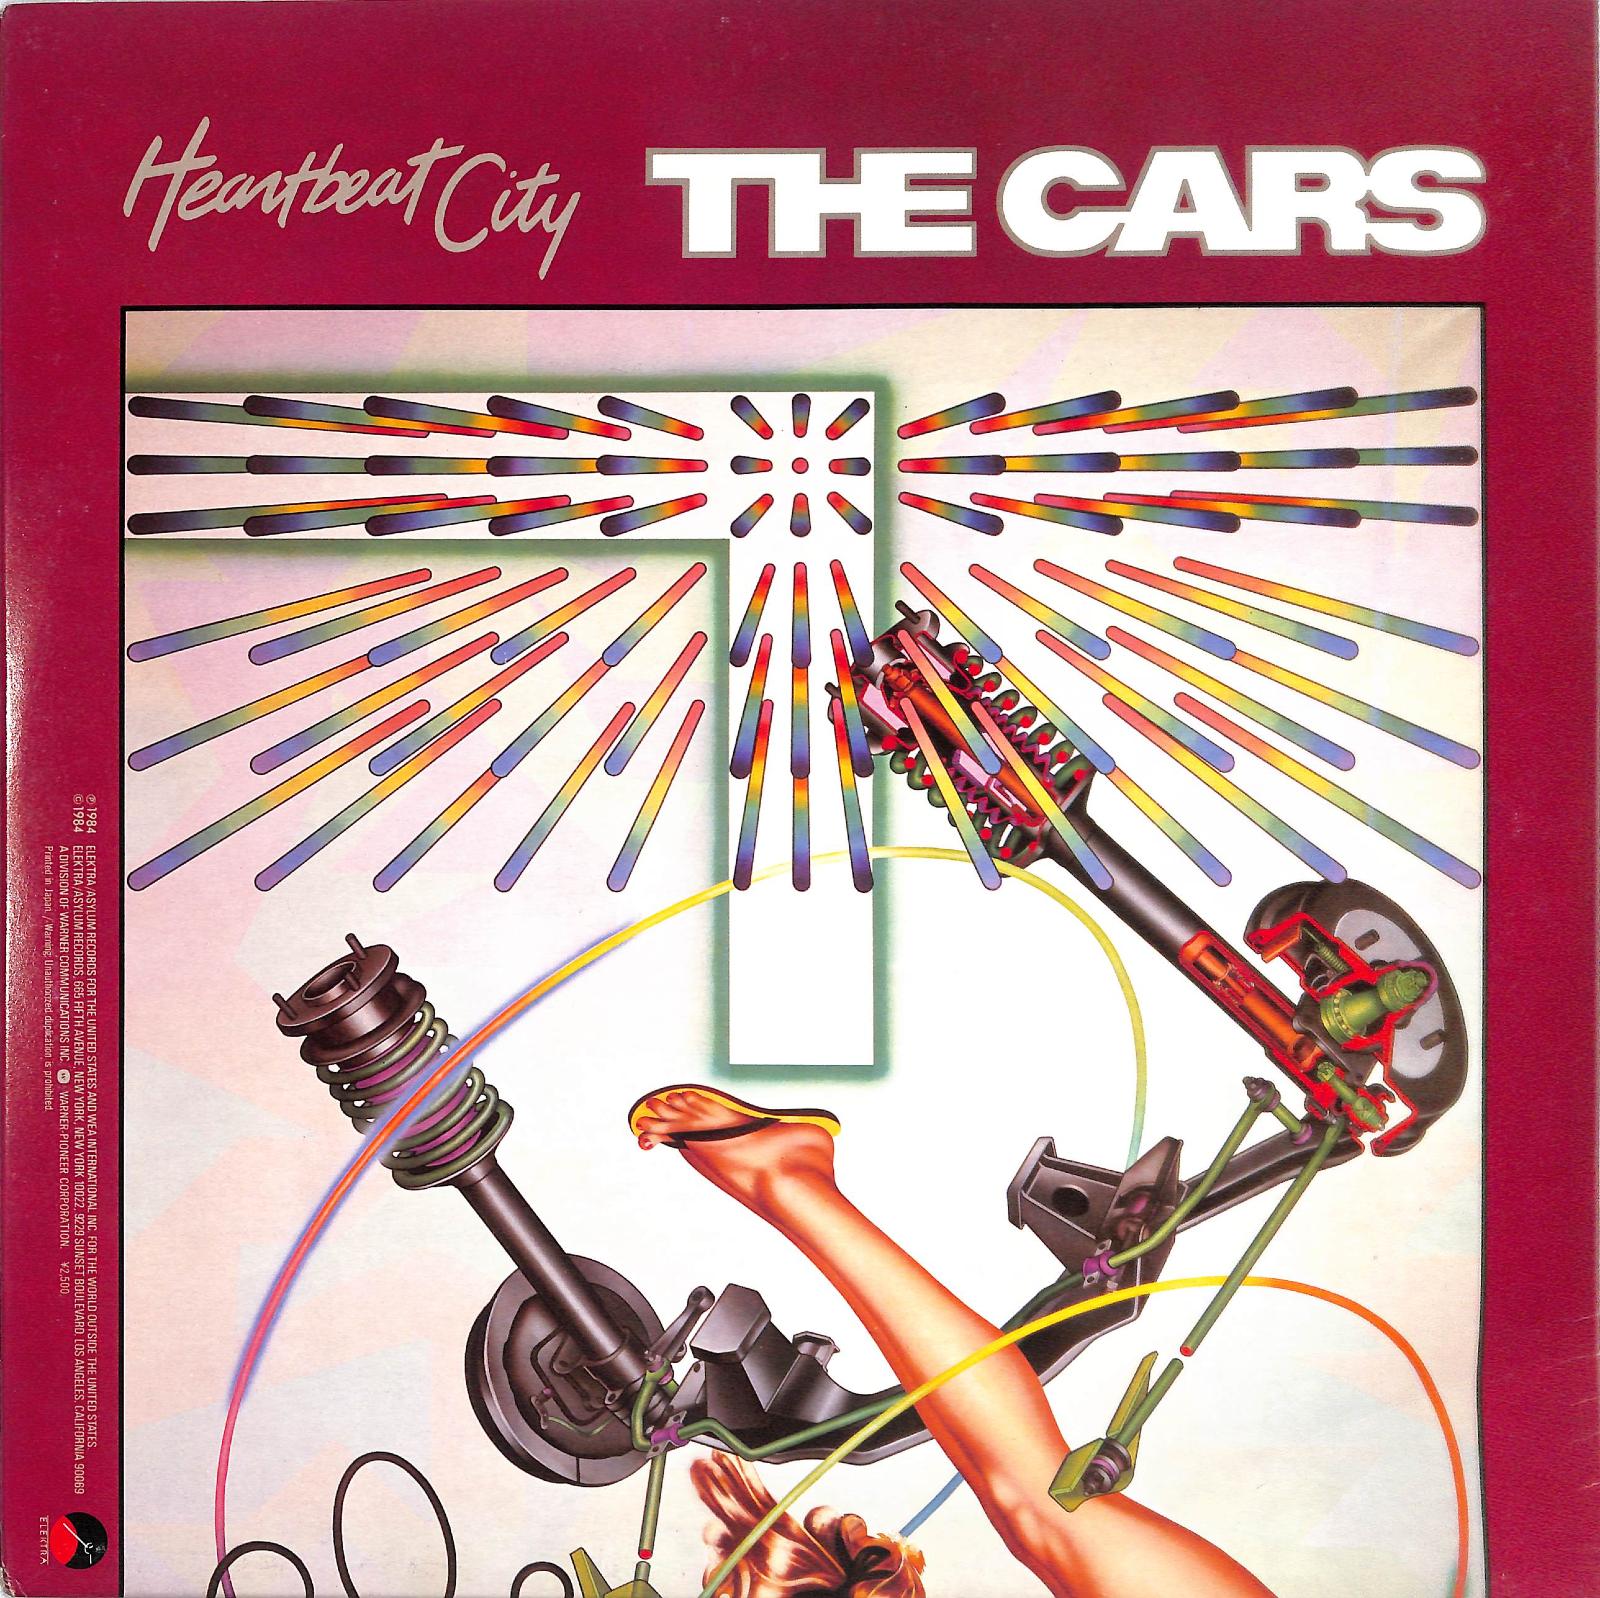 THE CARS - Heartbeat City